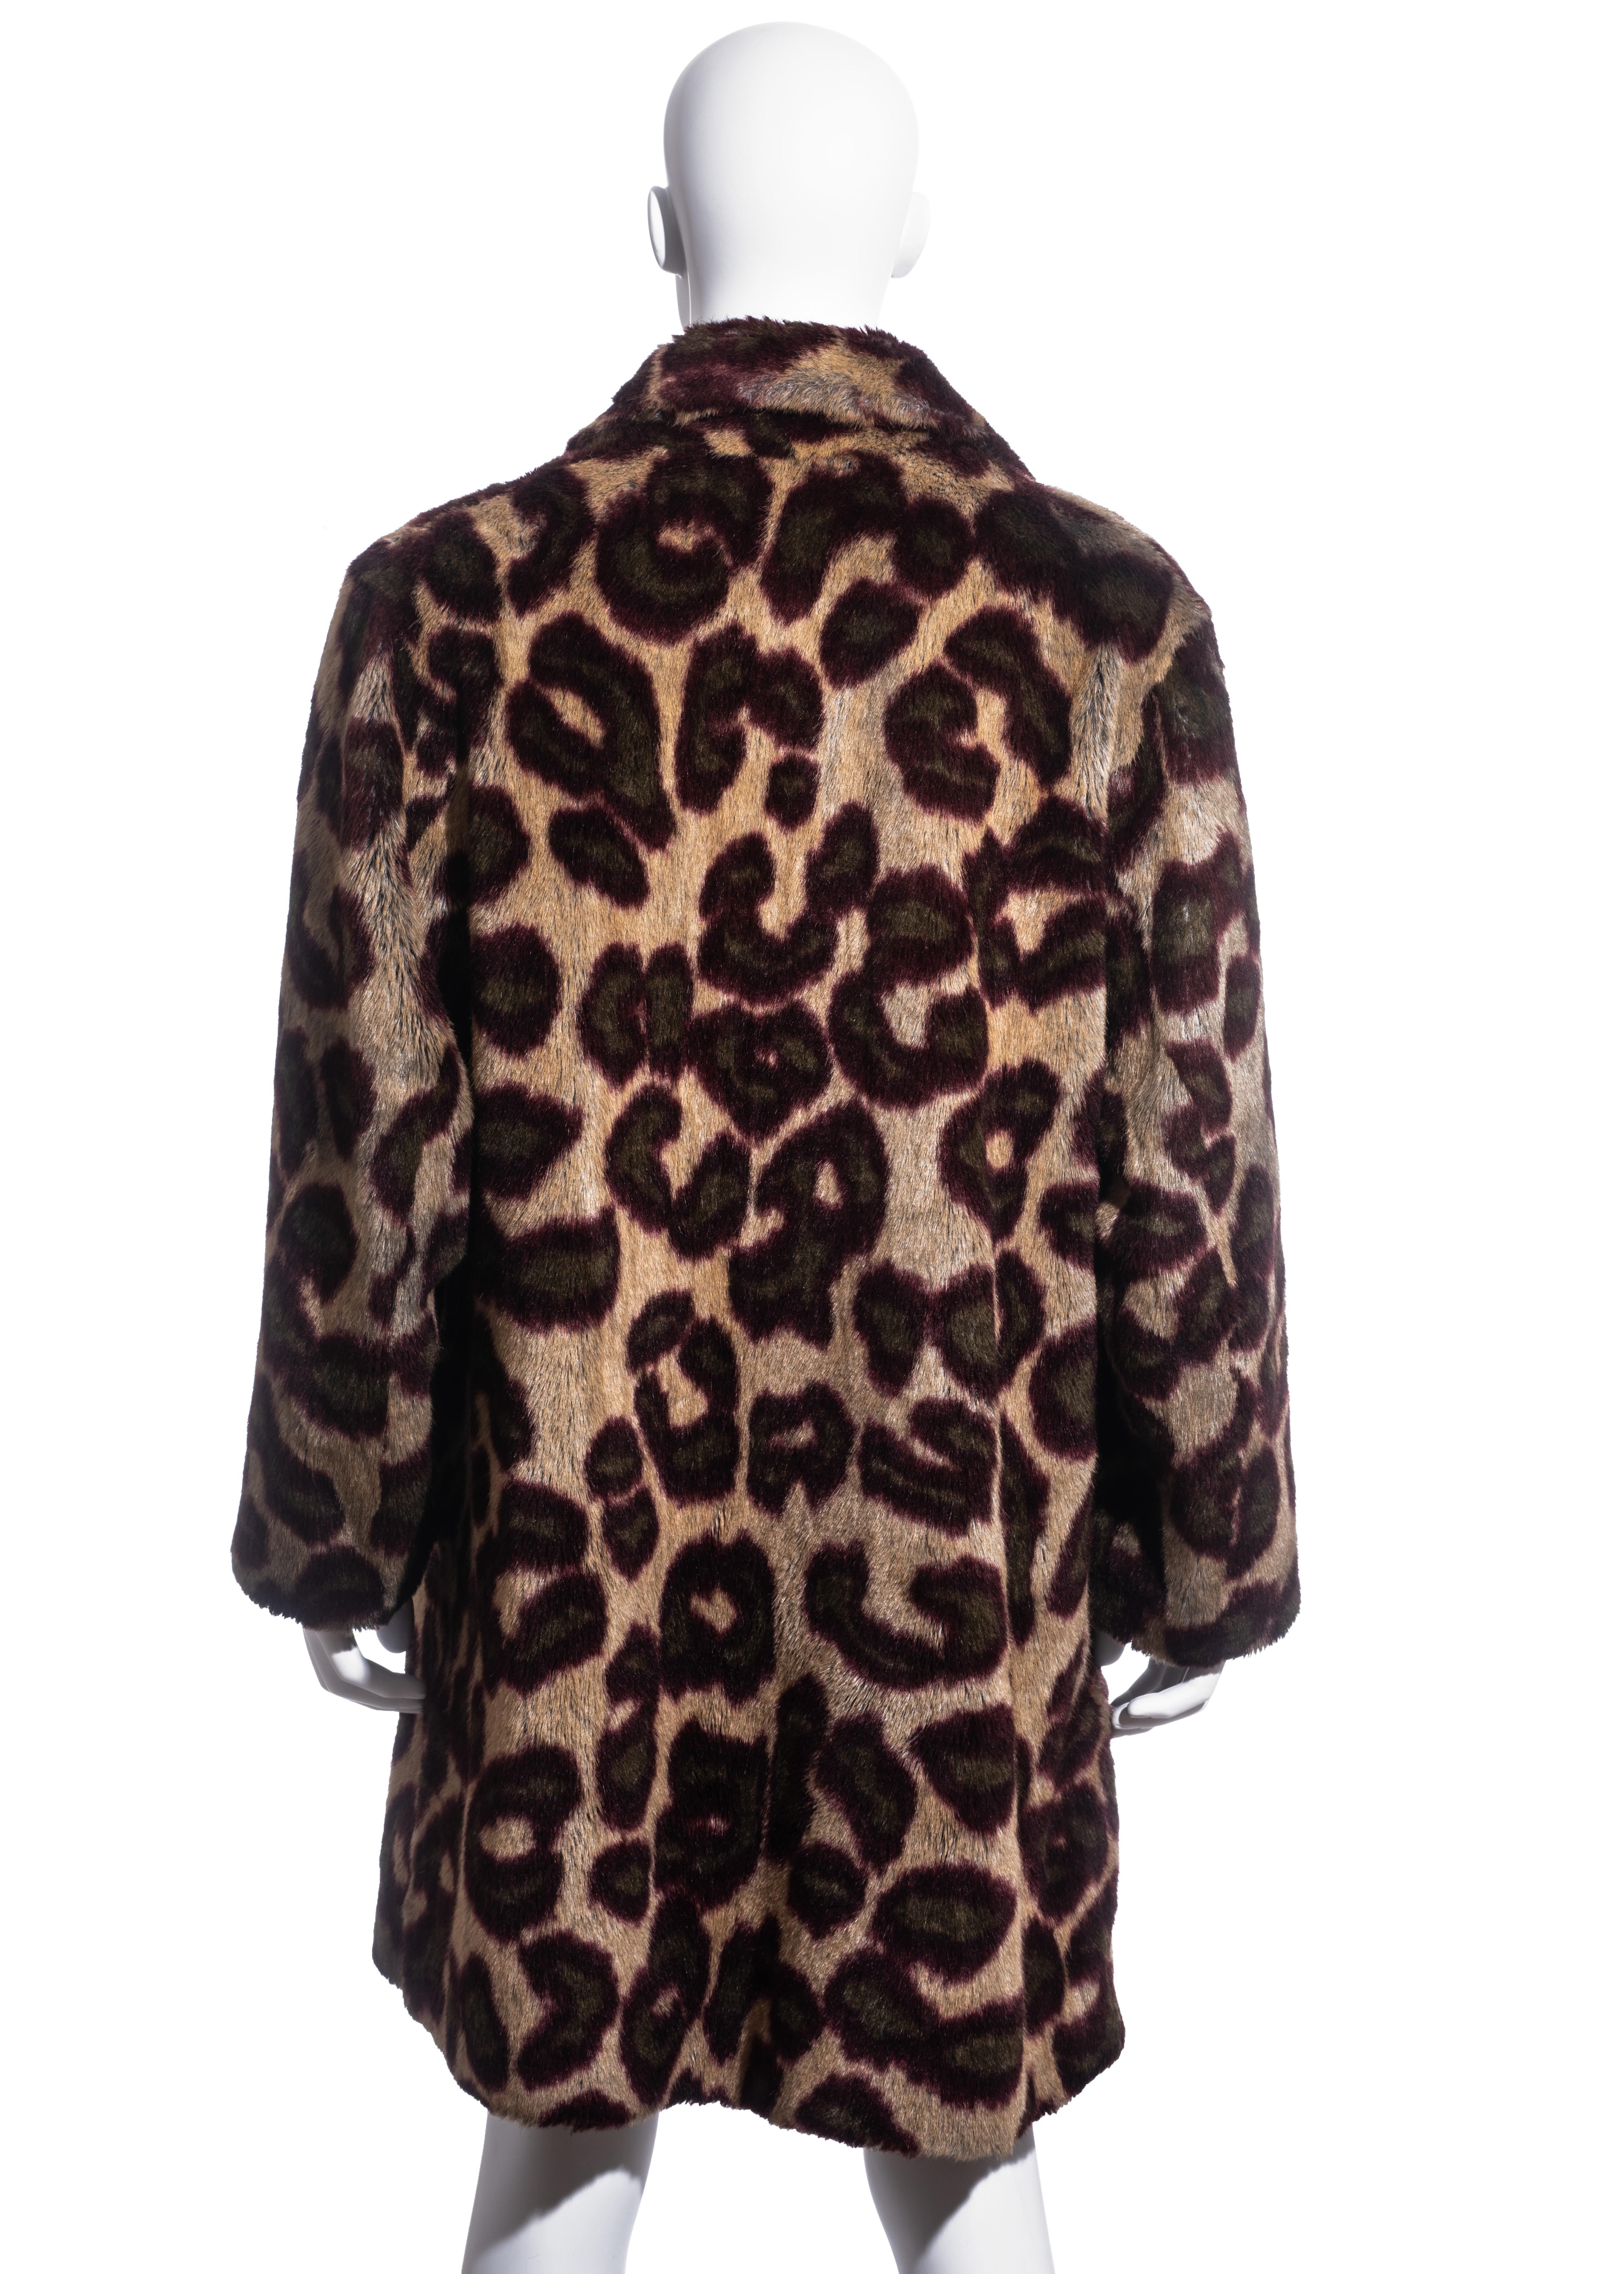 Unisex Vivienne Westwood leopard print faux fur coat, fw 1998 In Good Condition For Sale In London, GB